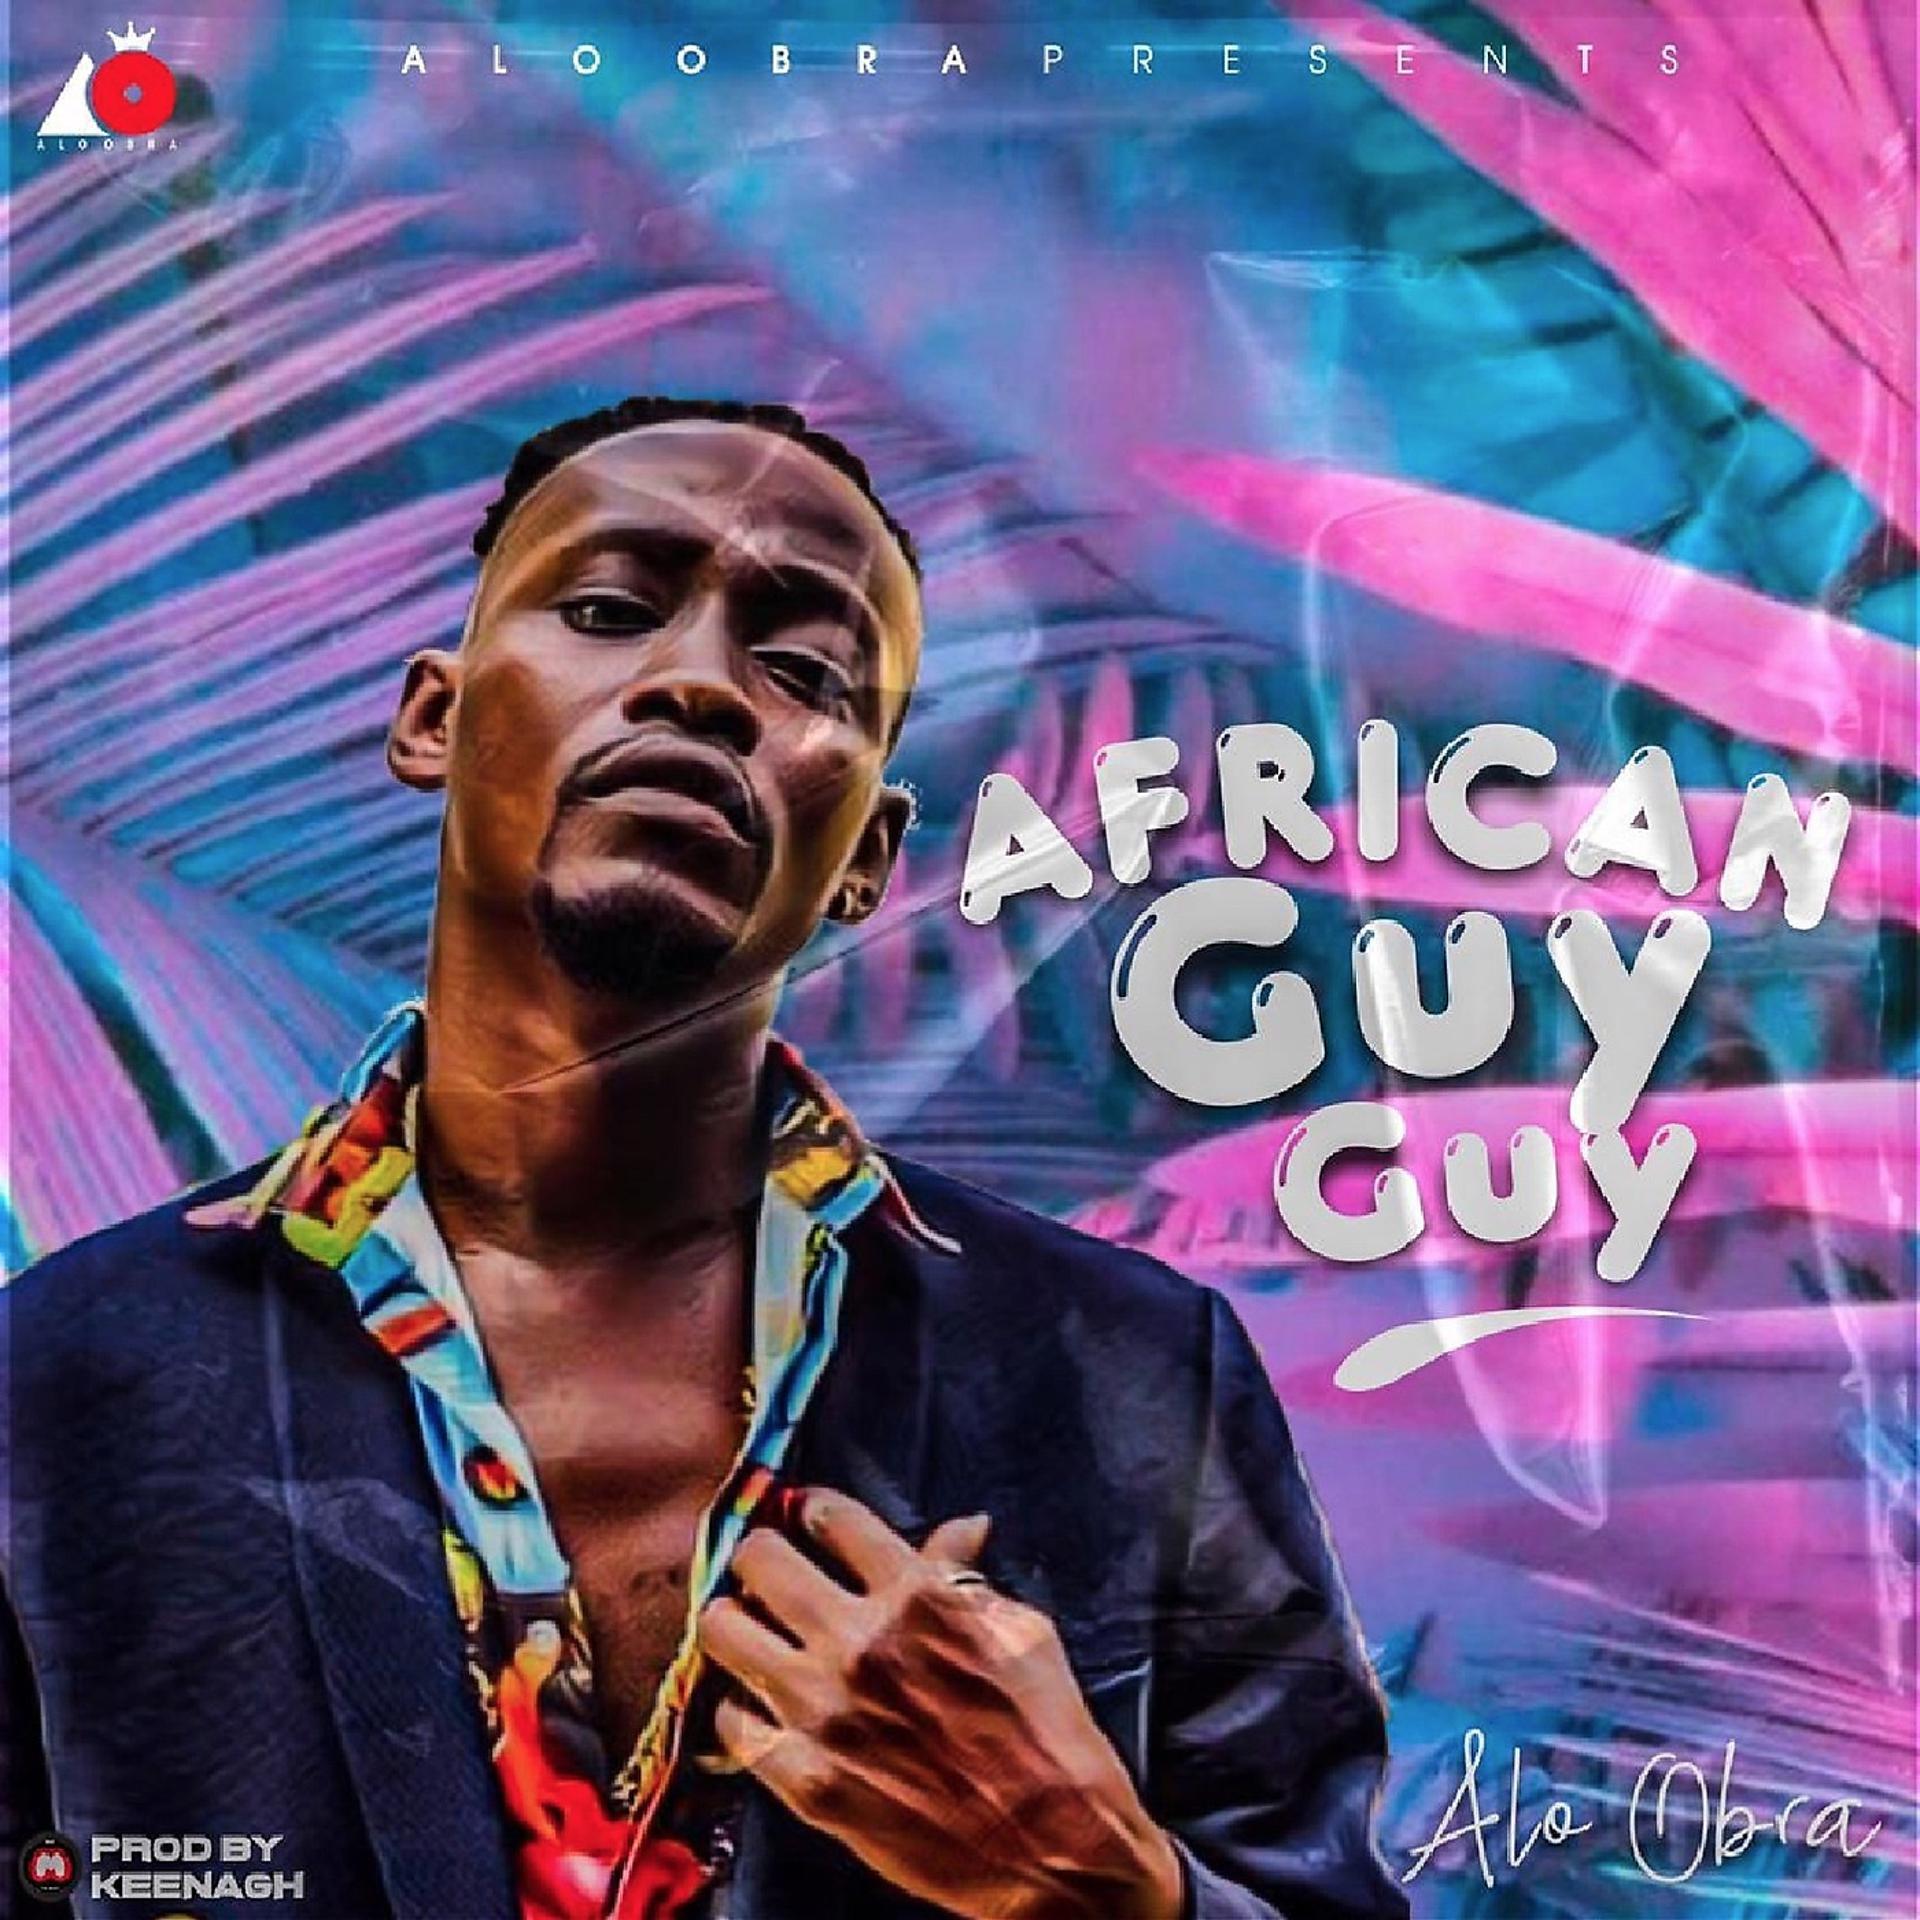 Постер альбома African Guy Guy